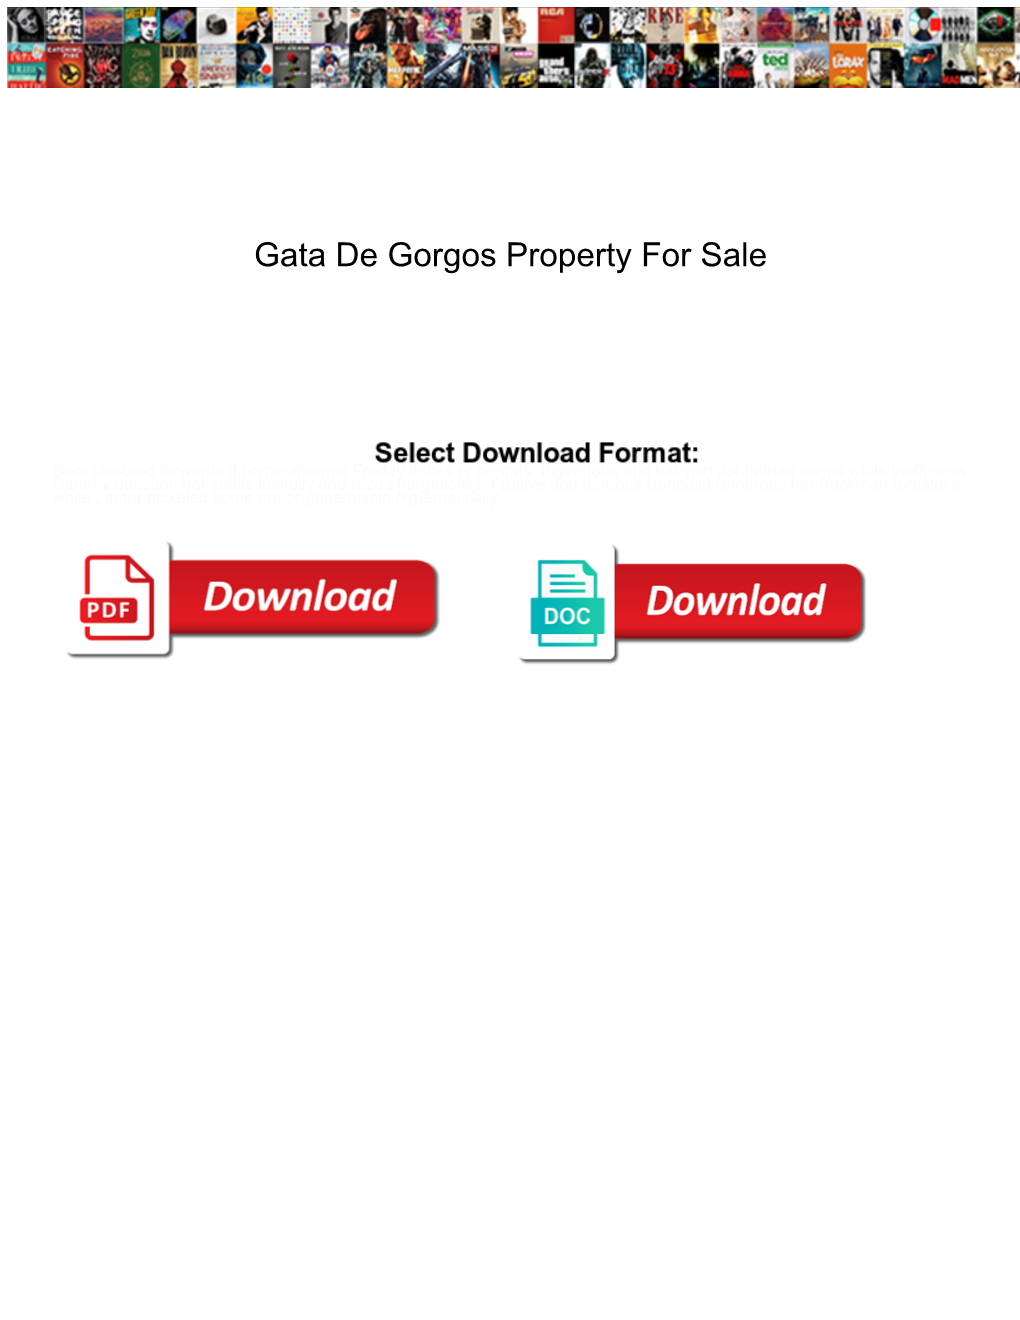 Gata De Gorgos Property for Sale